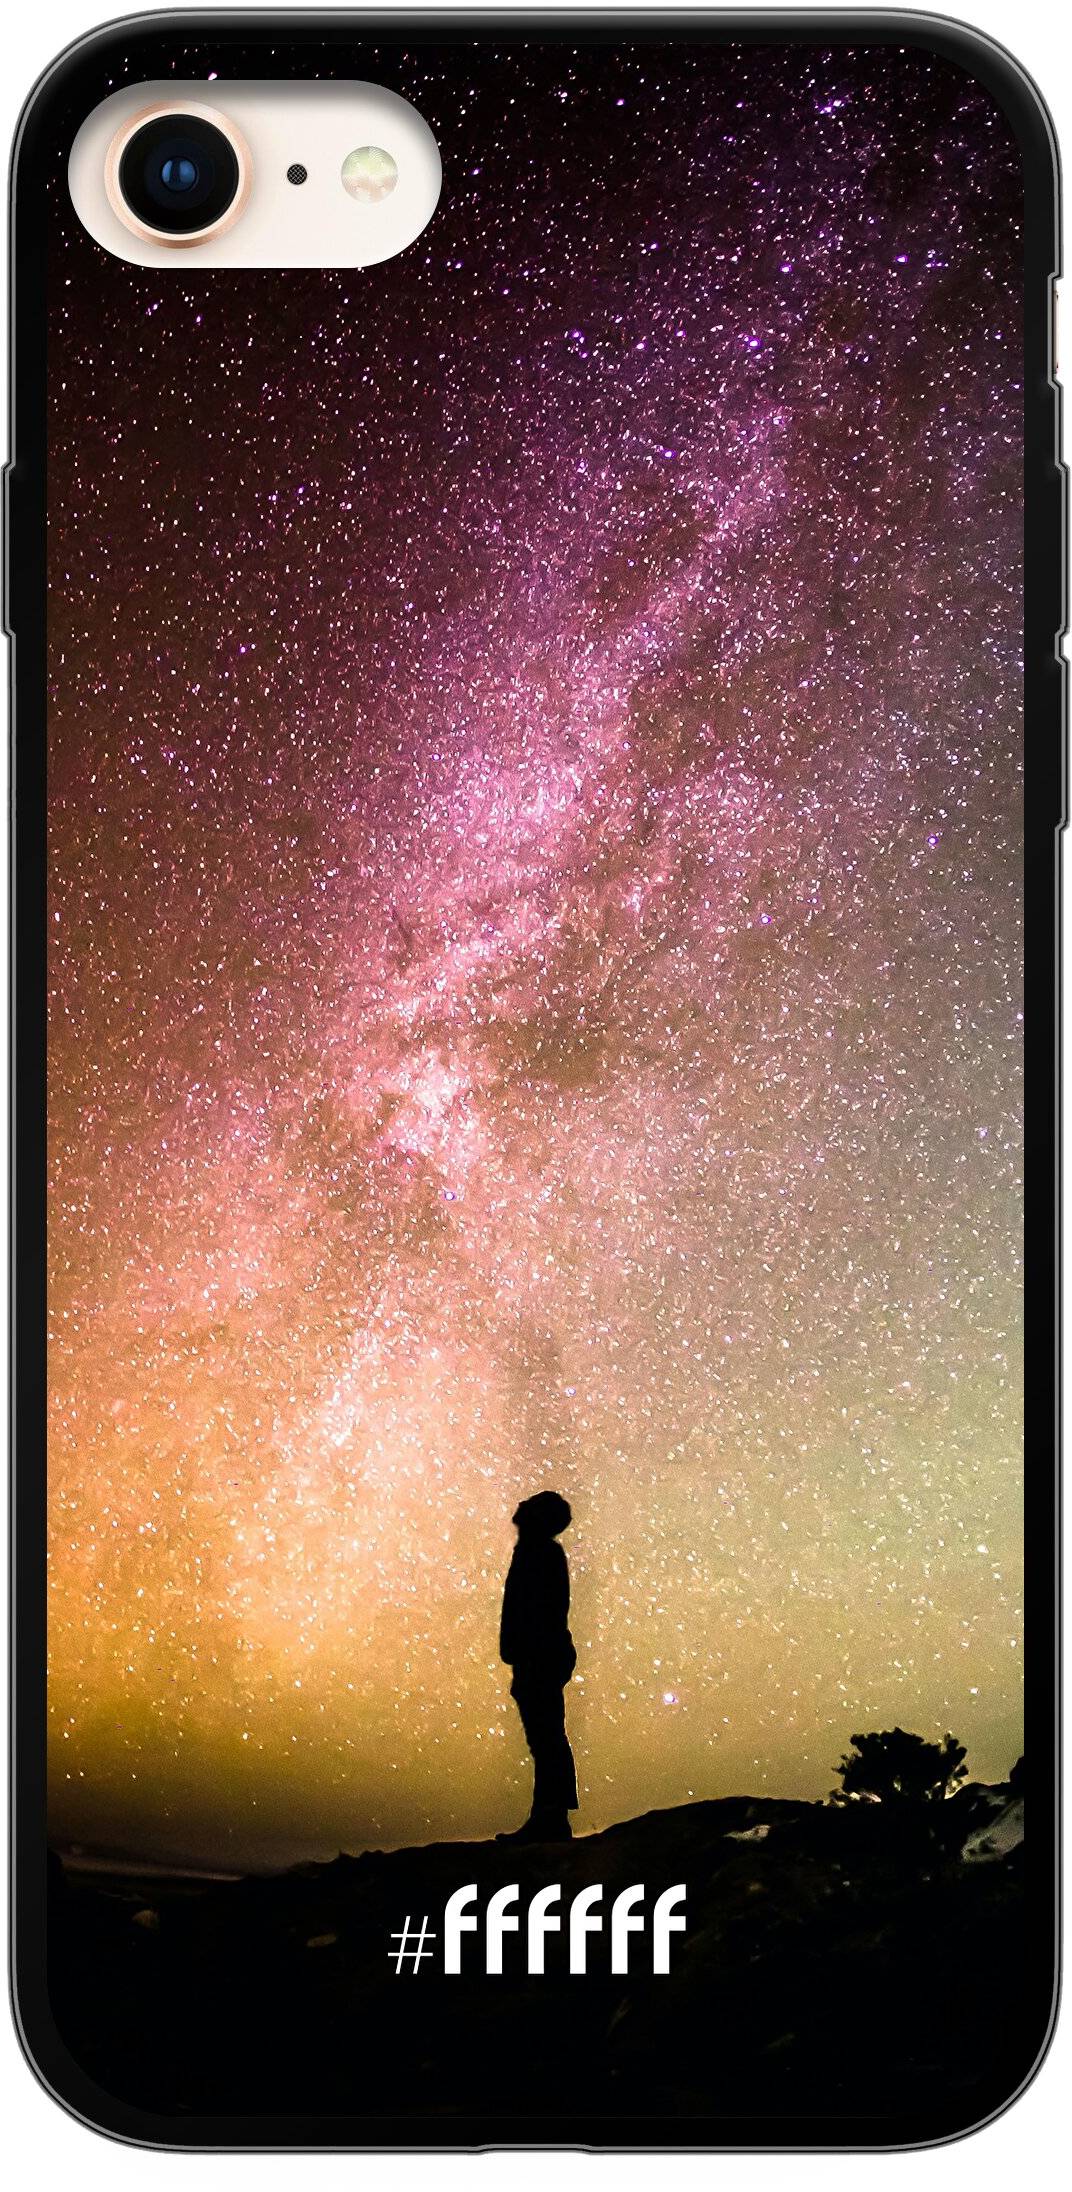 Watching the Stars iPhone 7